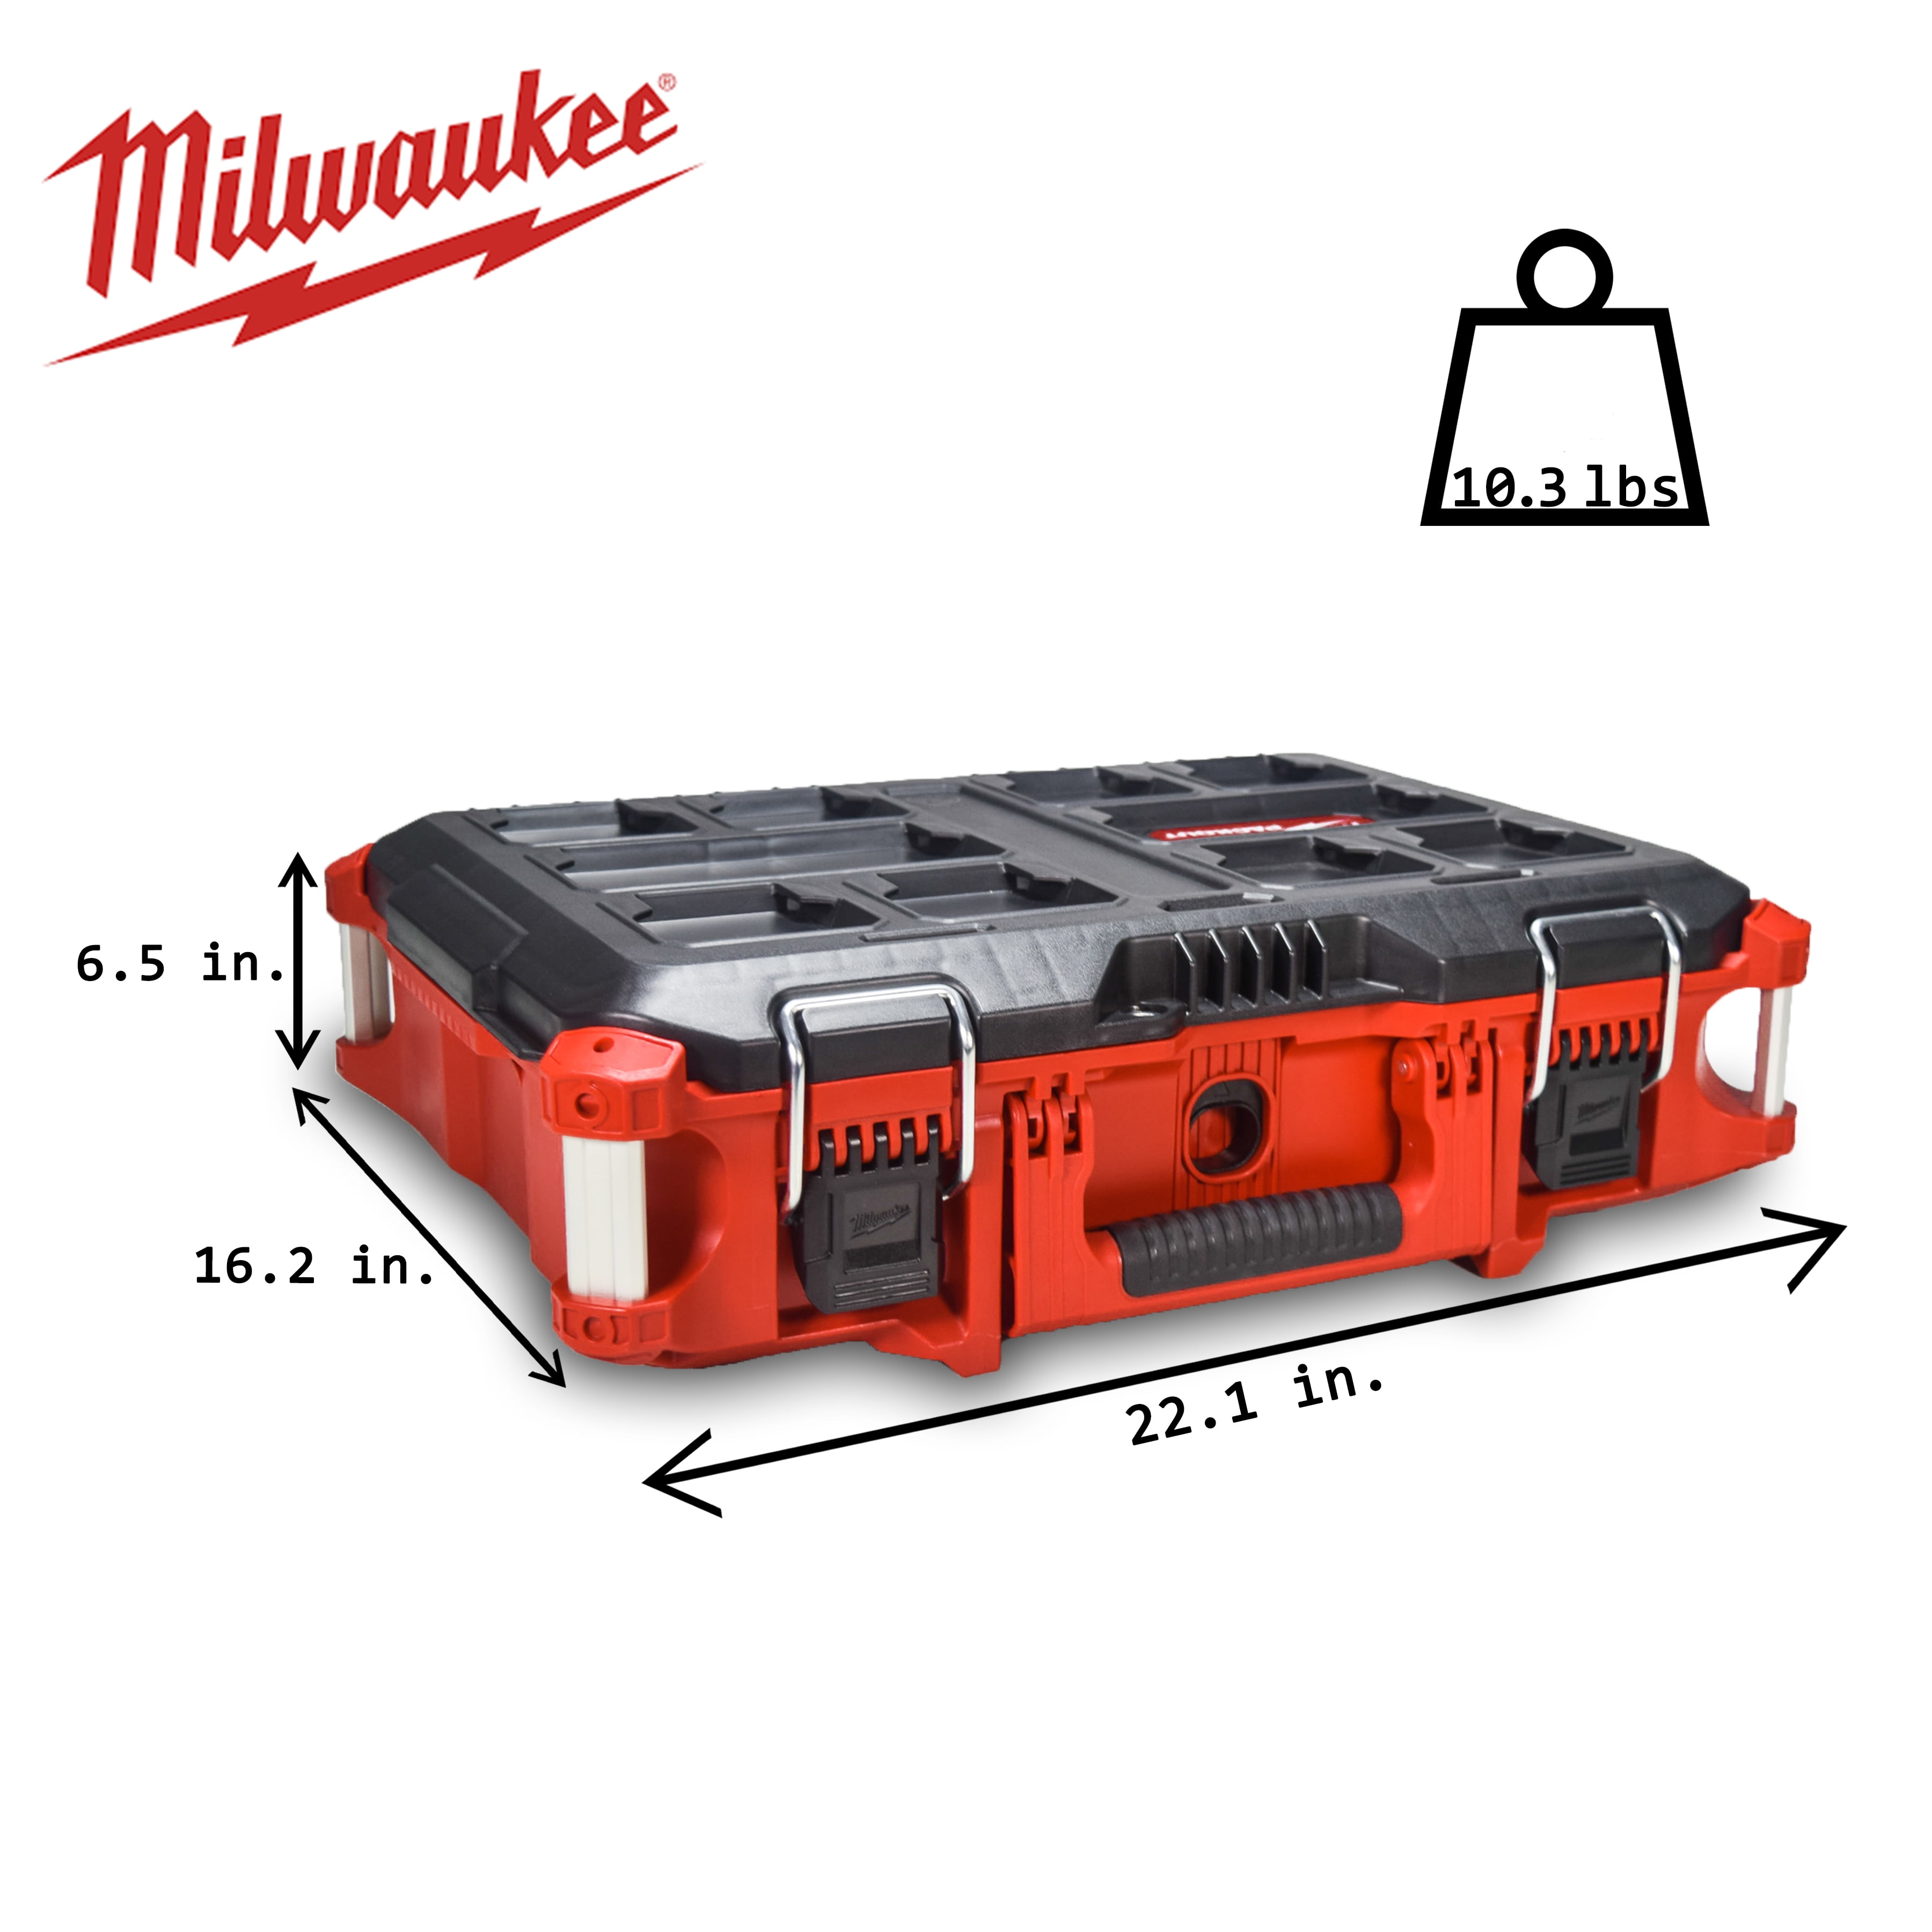 48-22-84xxKT - Milwaukee PACKOUT Mobile Tool Box